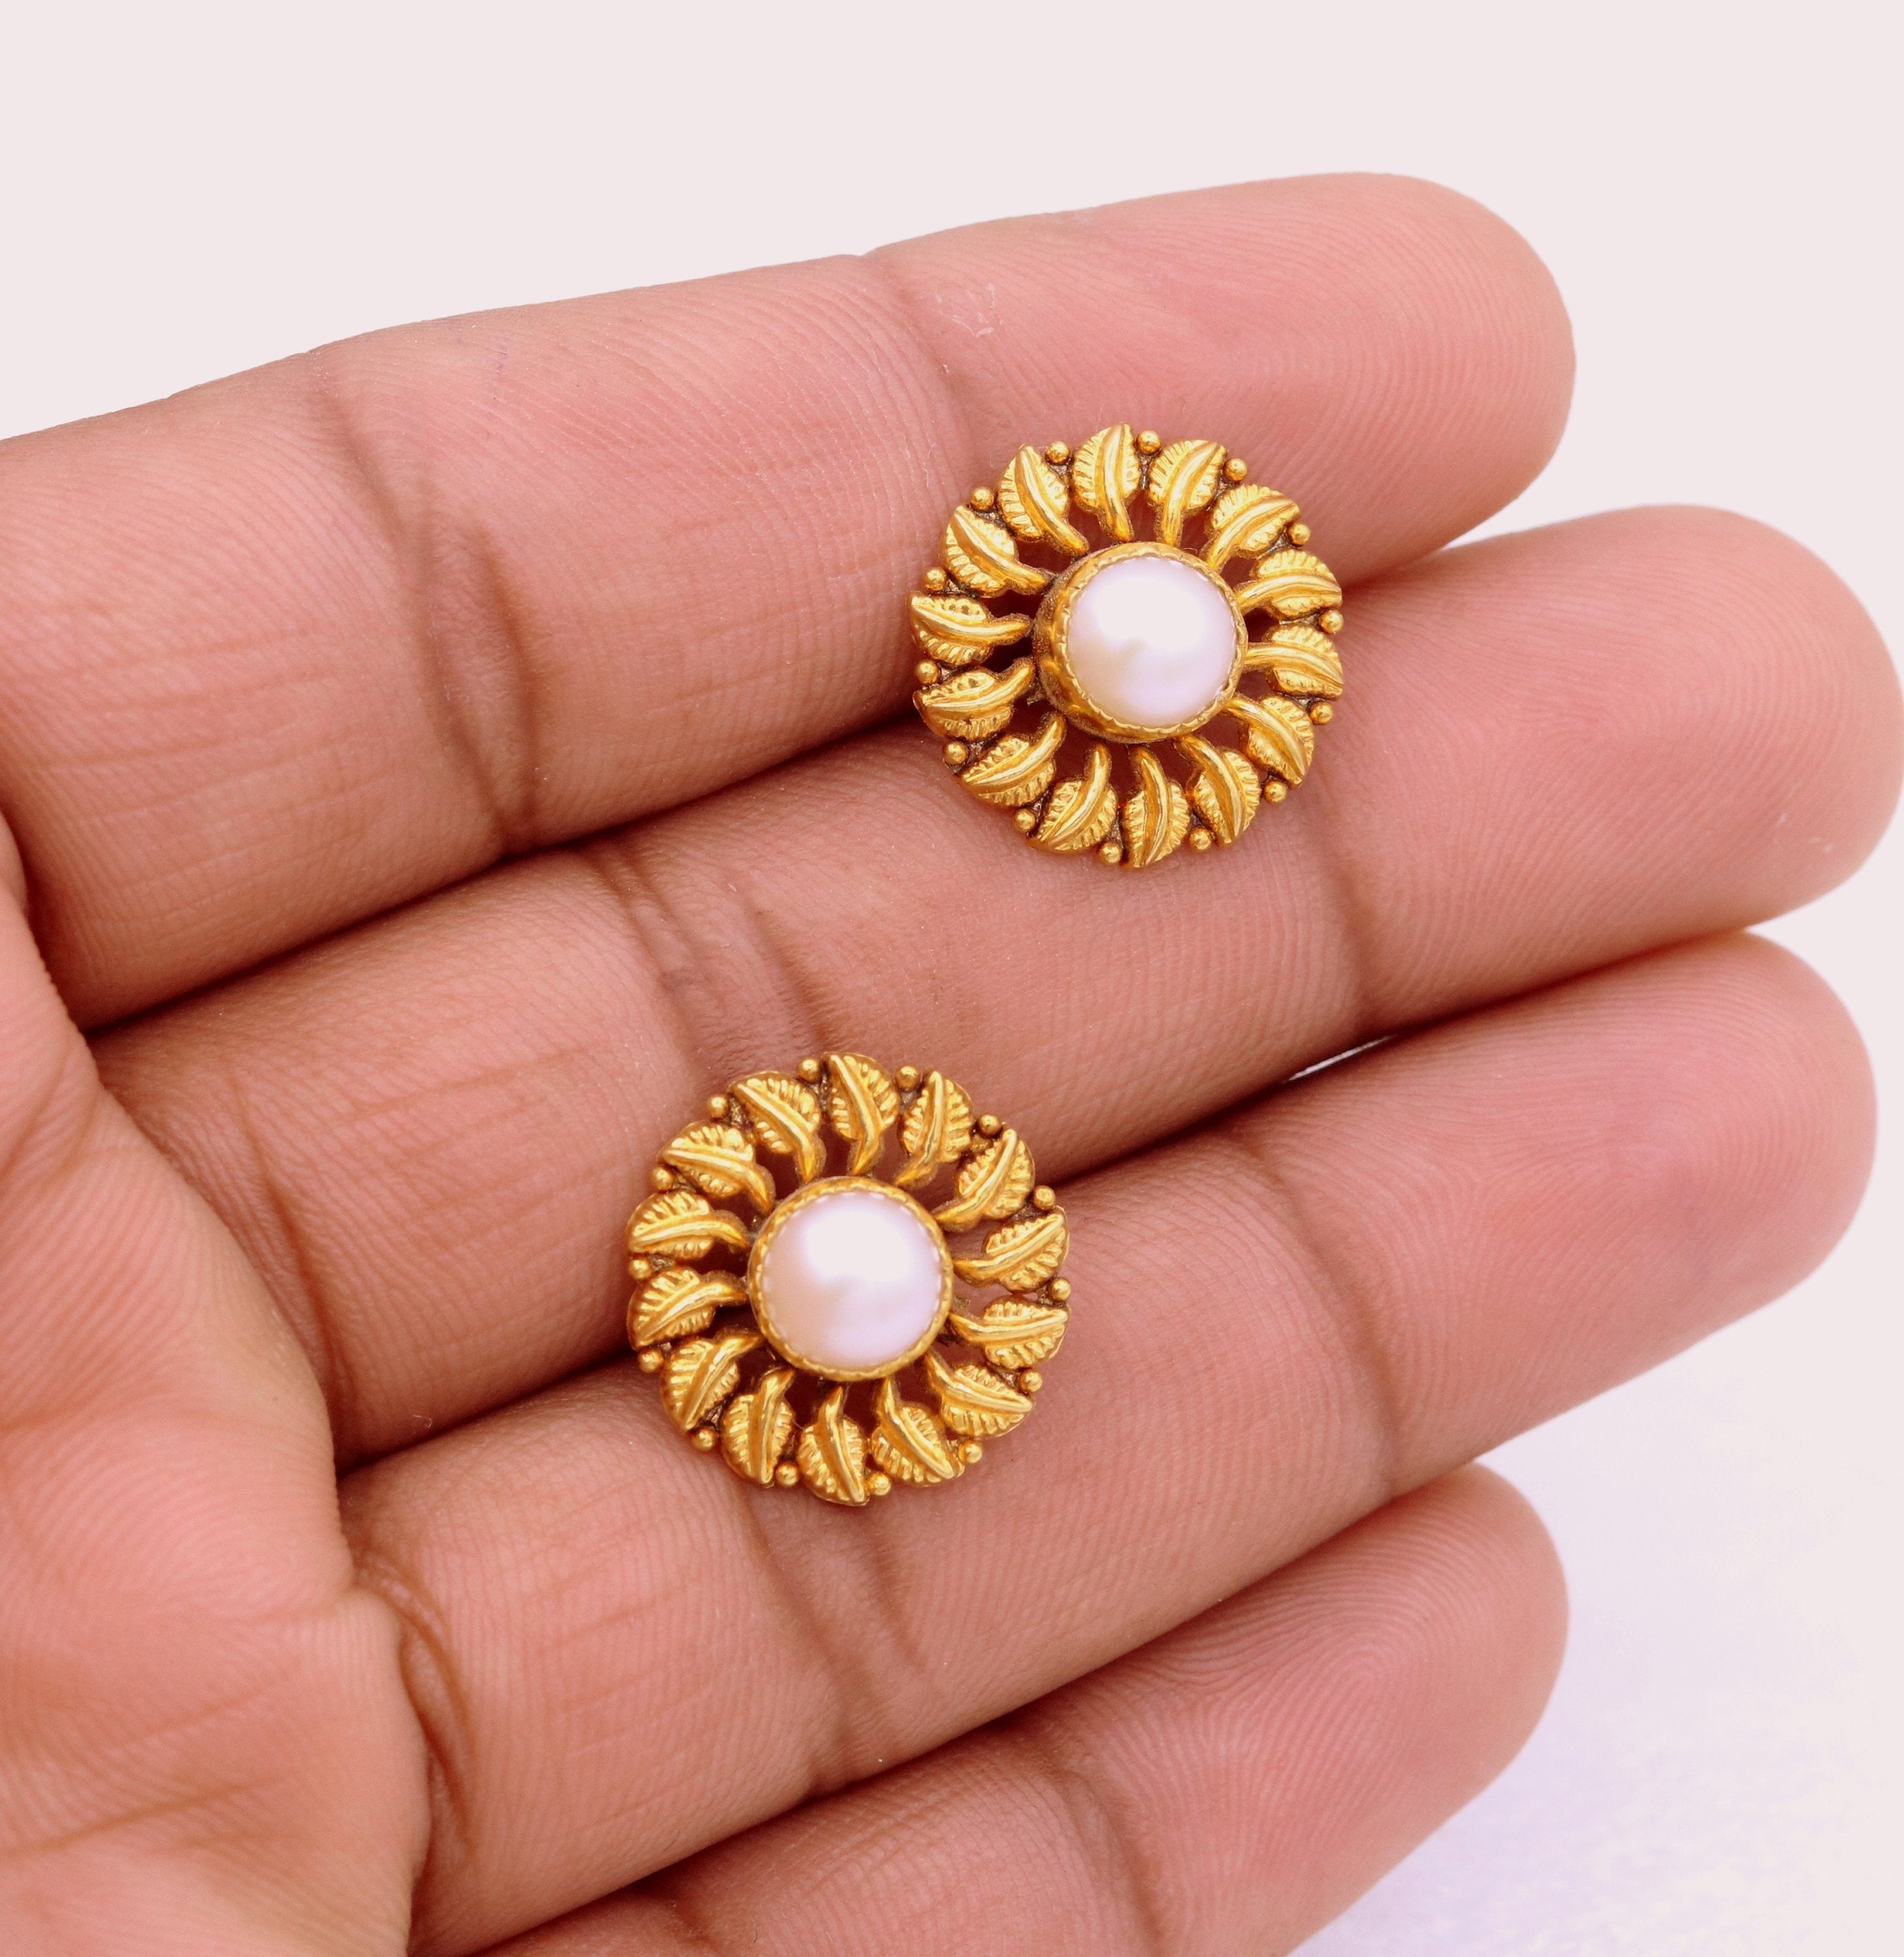 Buy quality Leafy 22kt Gold Earrings in Pune